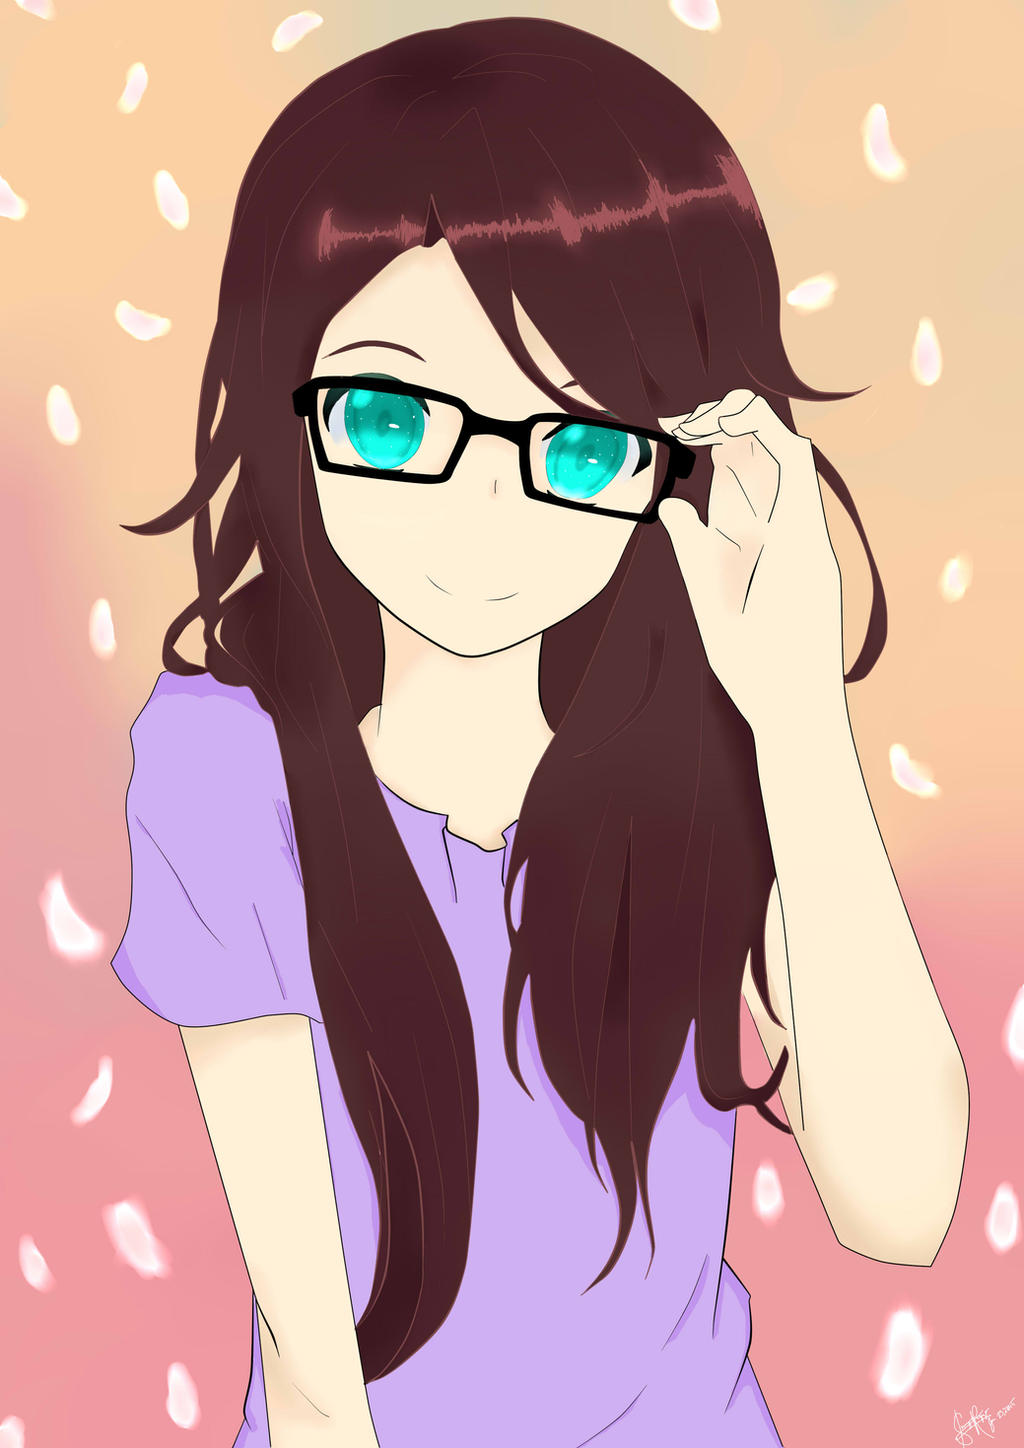 Anime Girl Glasses by xIzumi on DeviantArt